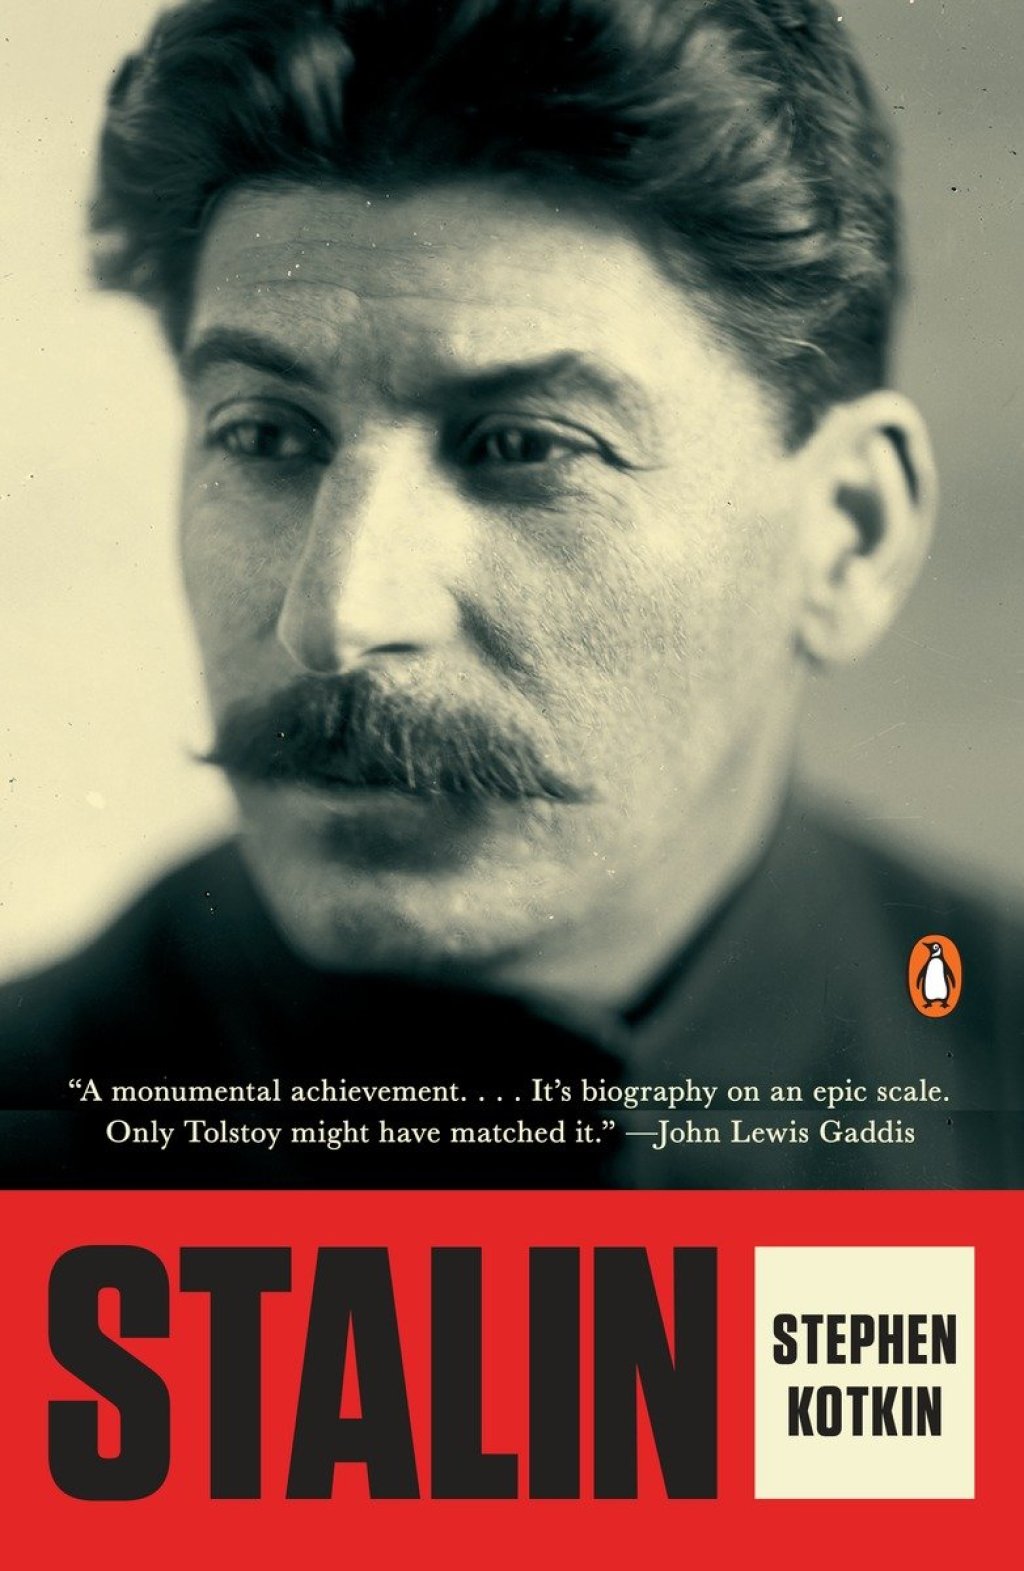 Stalin (eBook) - Stephen Kotkin,